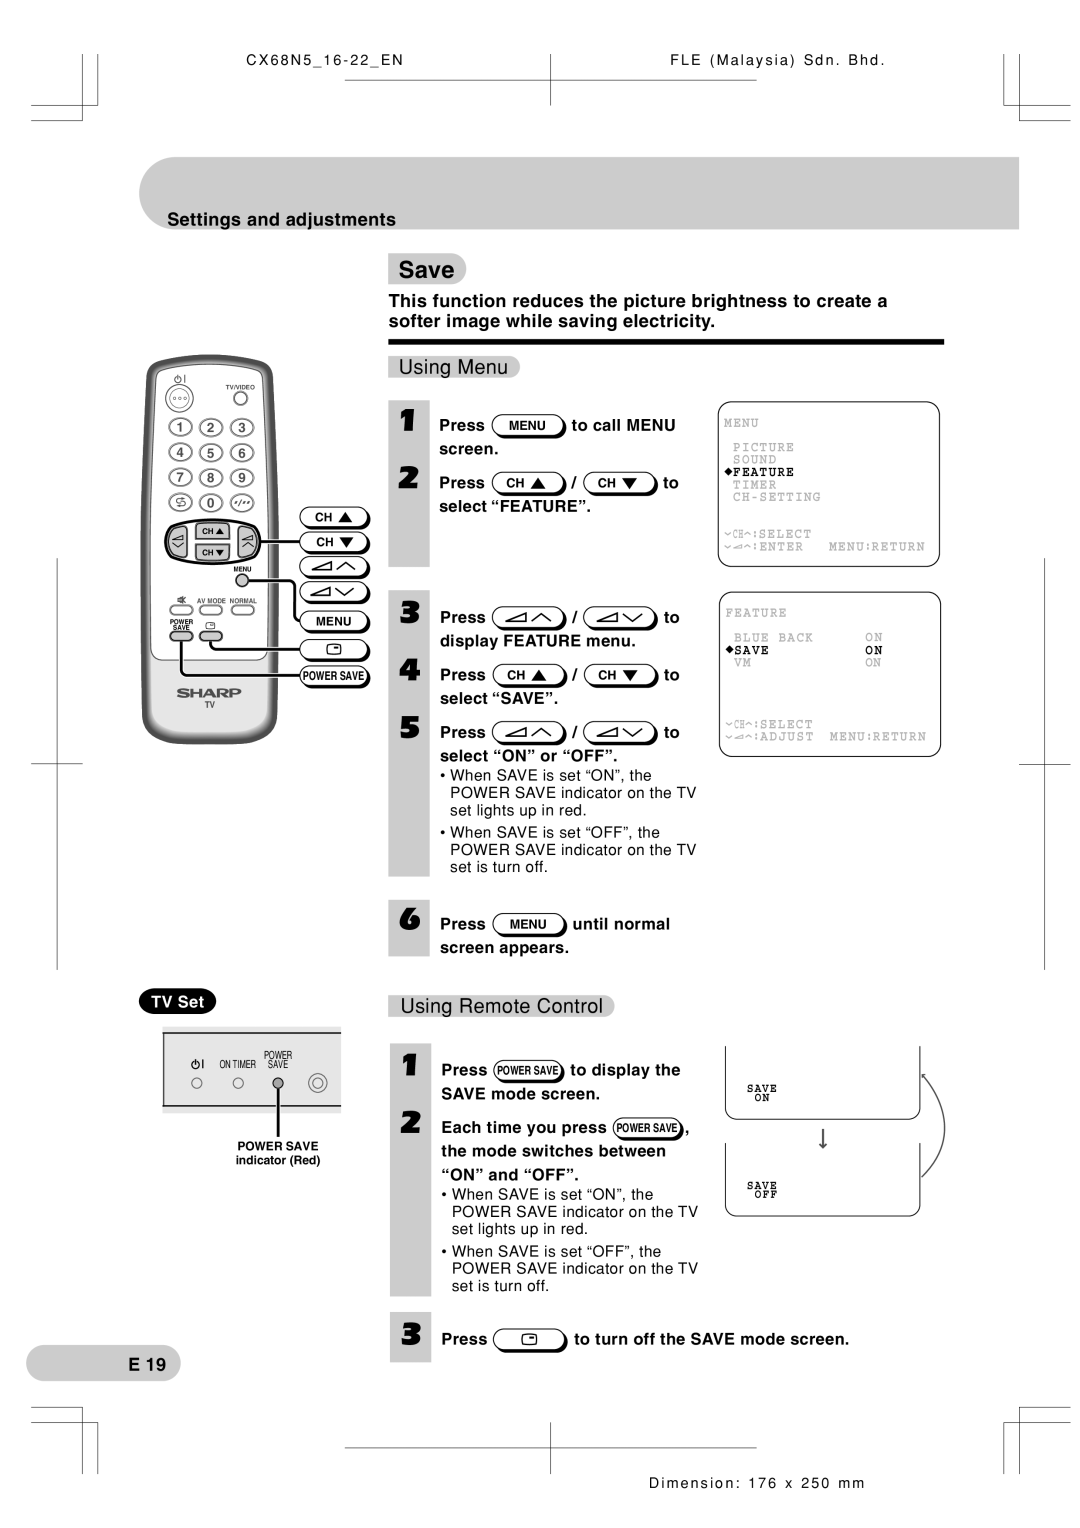 Sharp Cx68n5 operation manual Save, Using Menu, Using Remote Control, Settings and adjustments, TV Set 